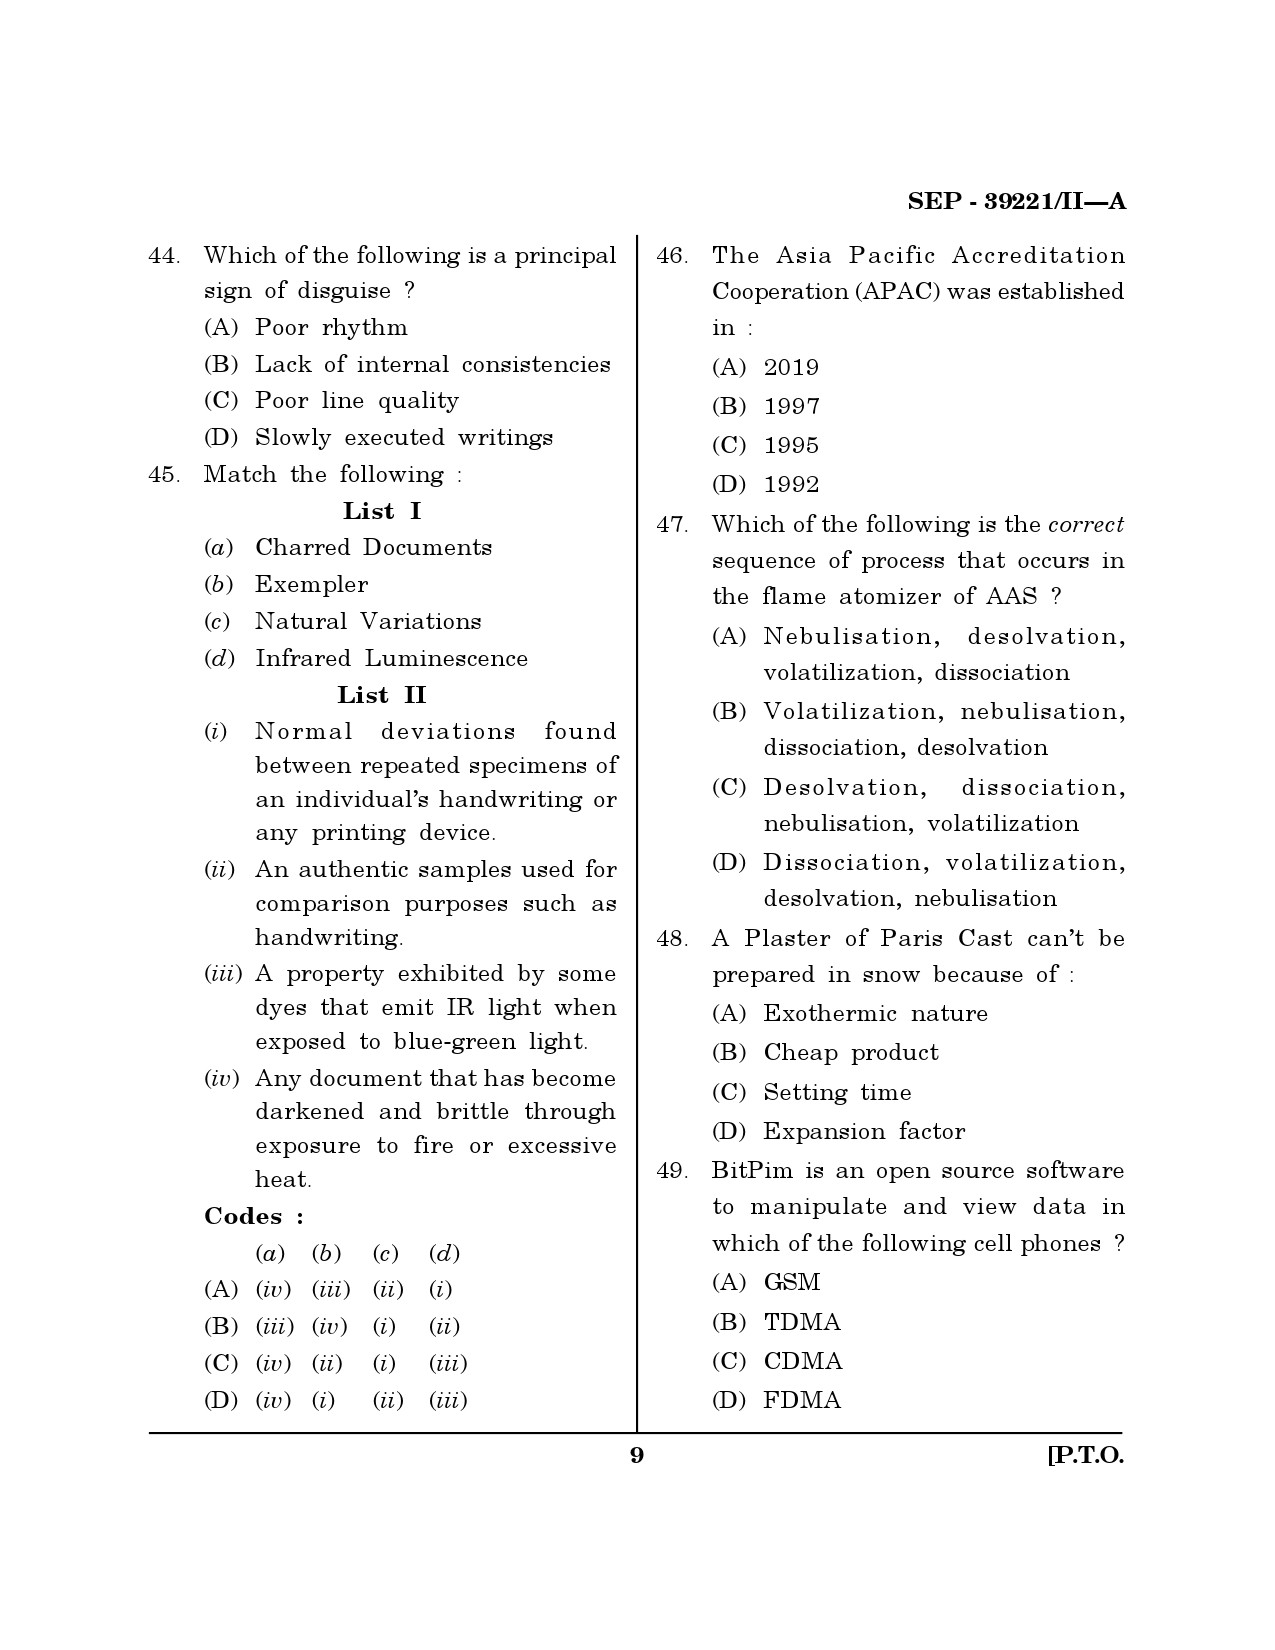 Maharashtra SET Forensic Science Exam Question Paper September 2021 8